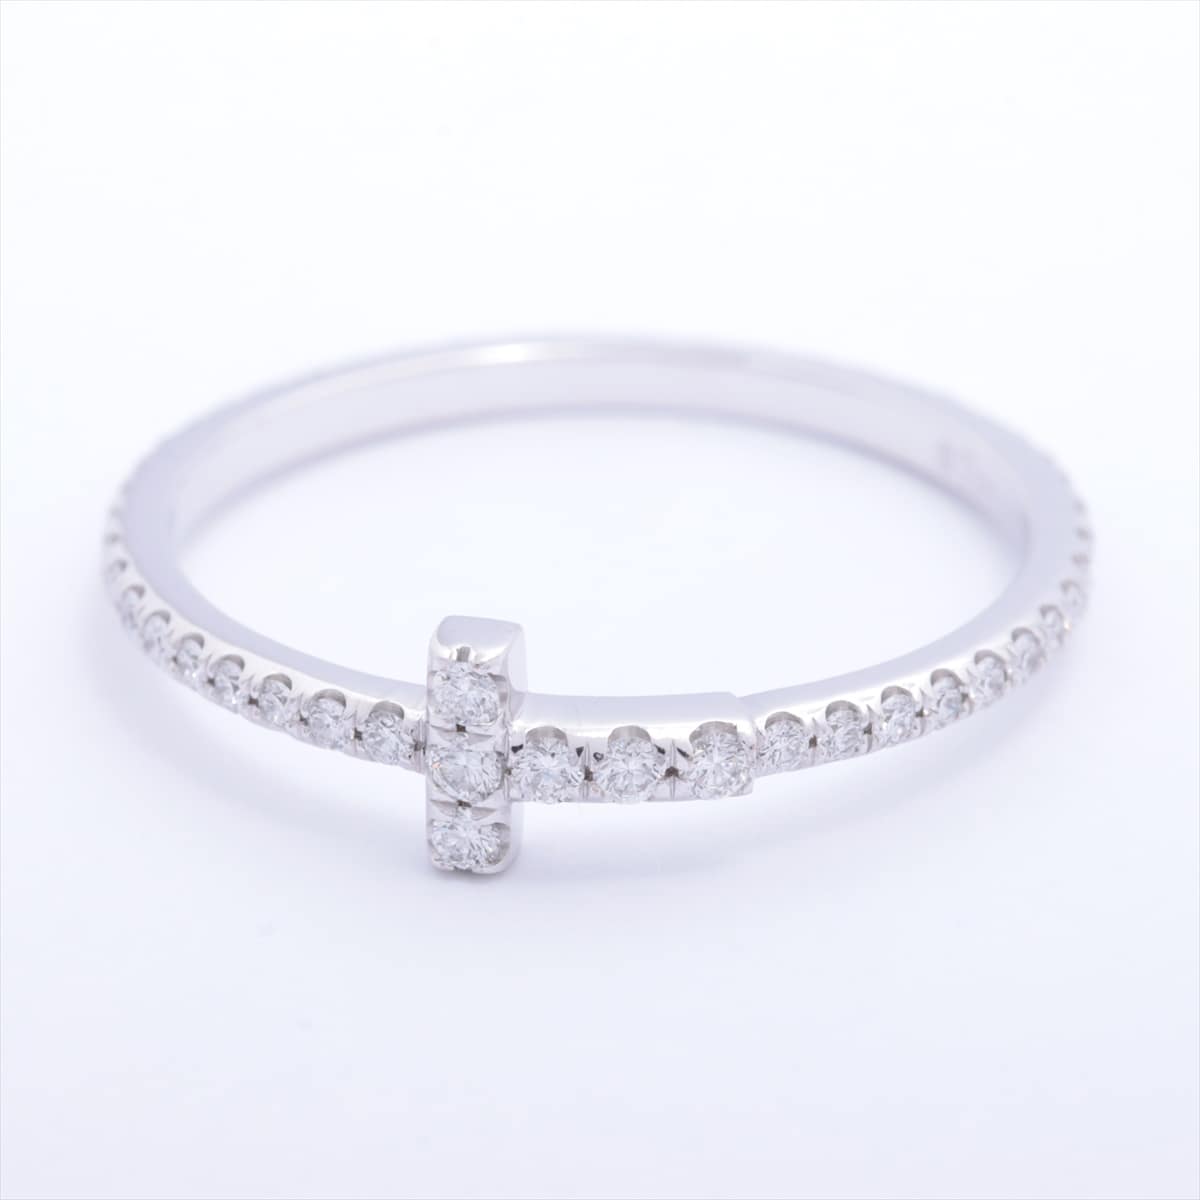 Tiffany T Wire Full circle diamond rings 750 WG 1.4g